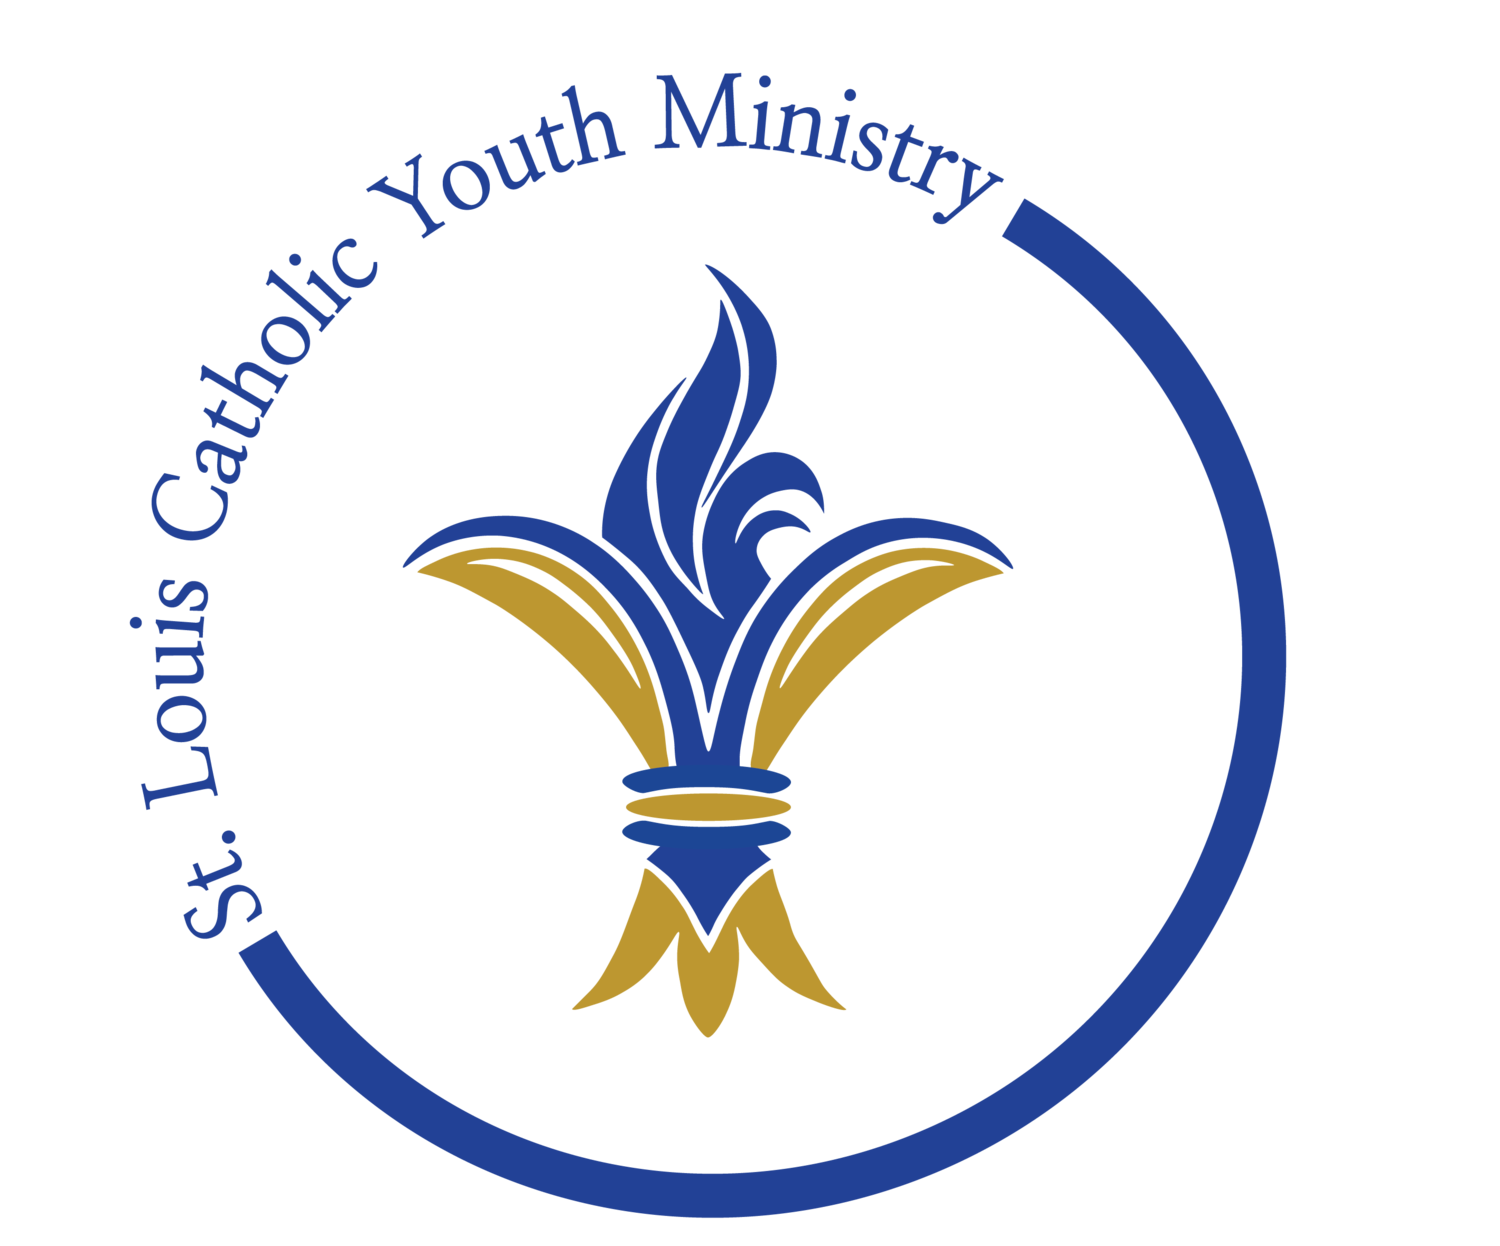 St. Louis Catholic Youth Ministry